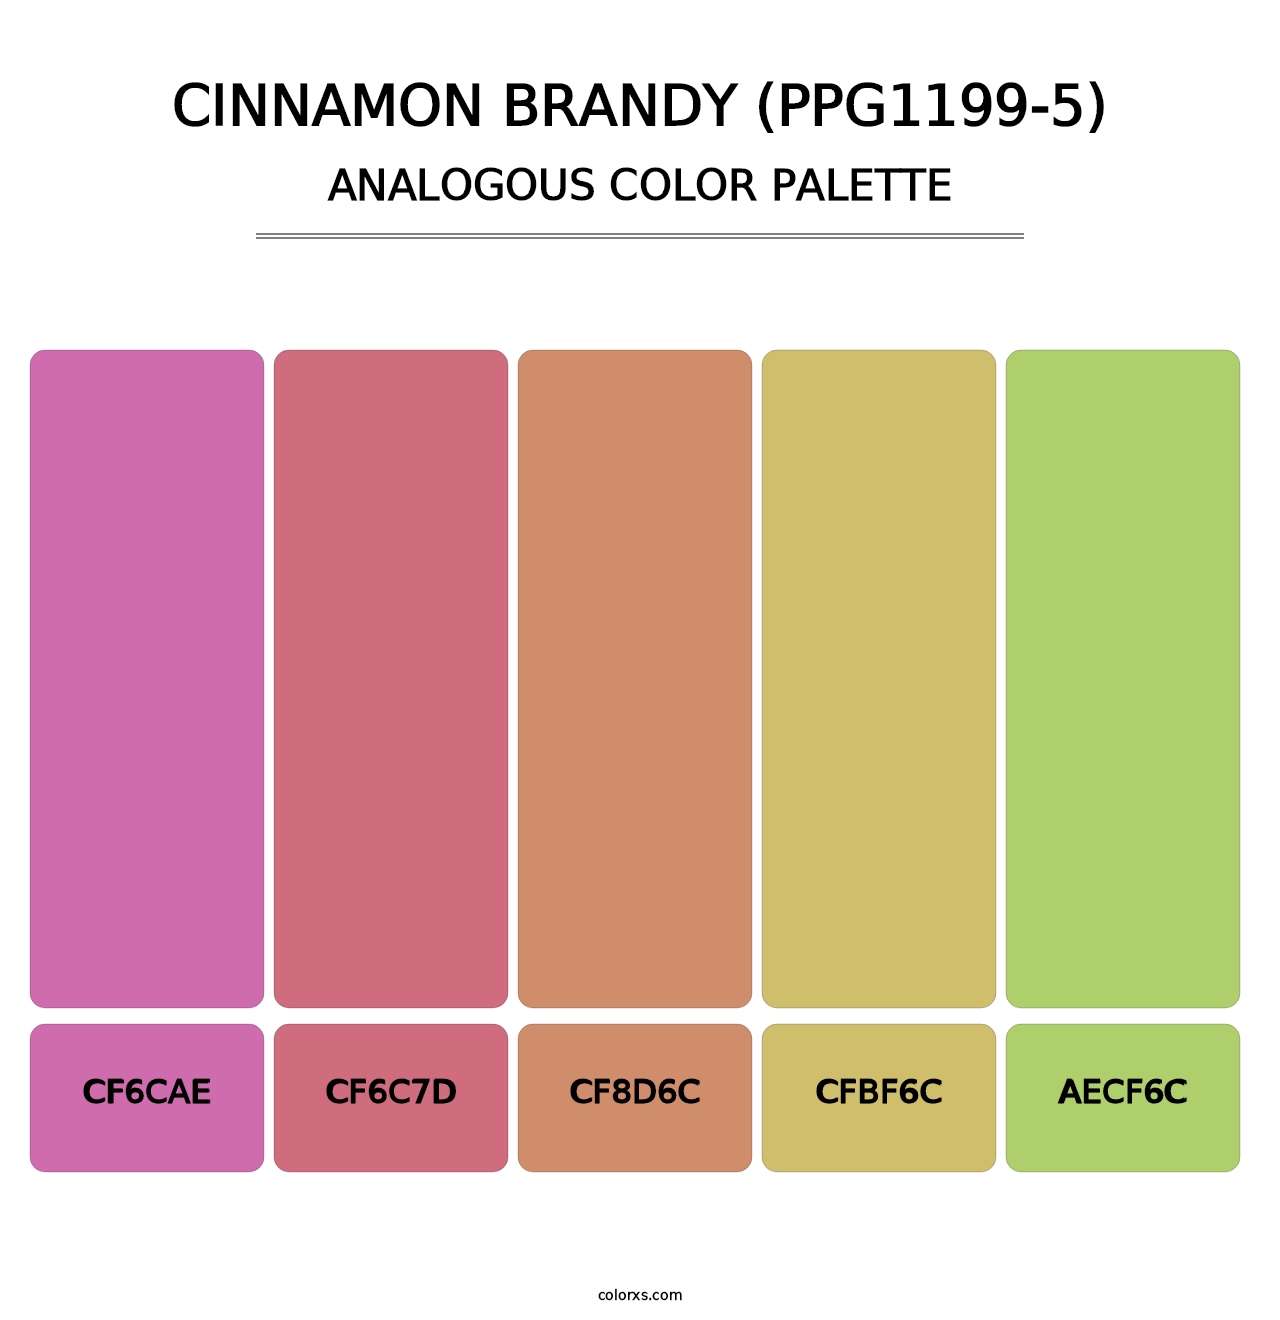 Cinnamon Brandy (PPG1199-5) - Analogous Color Palette